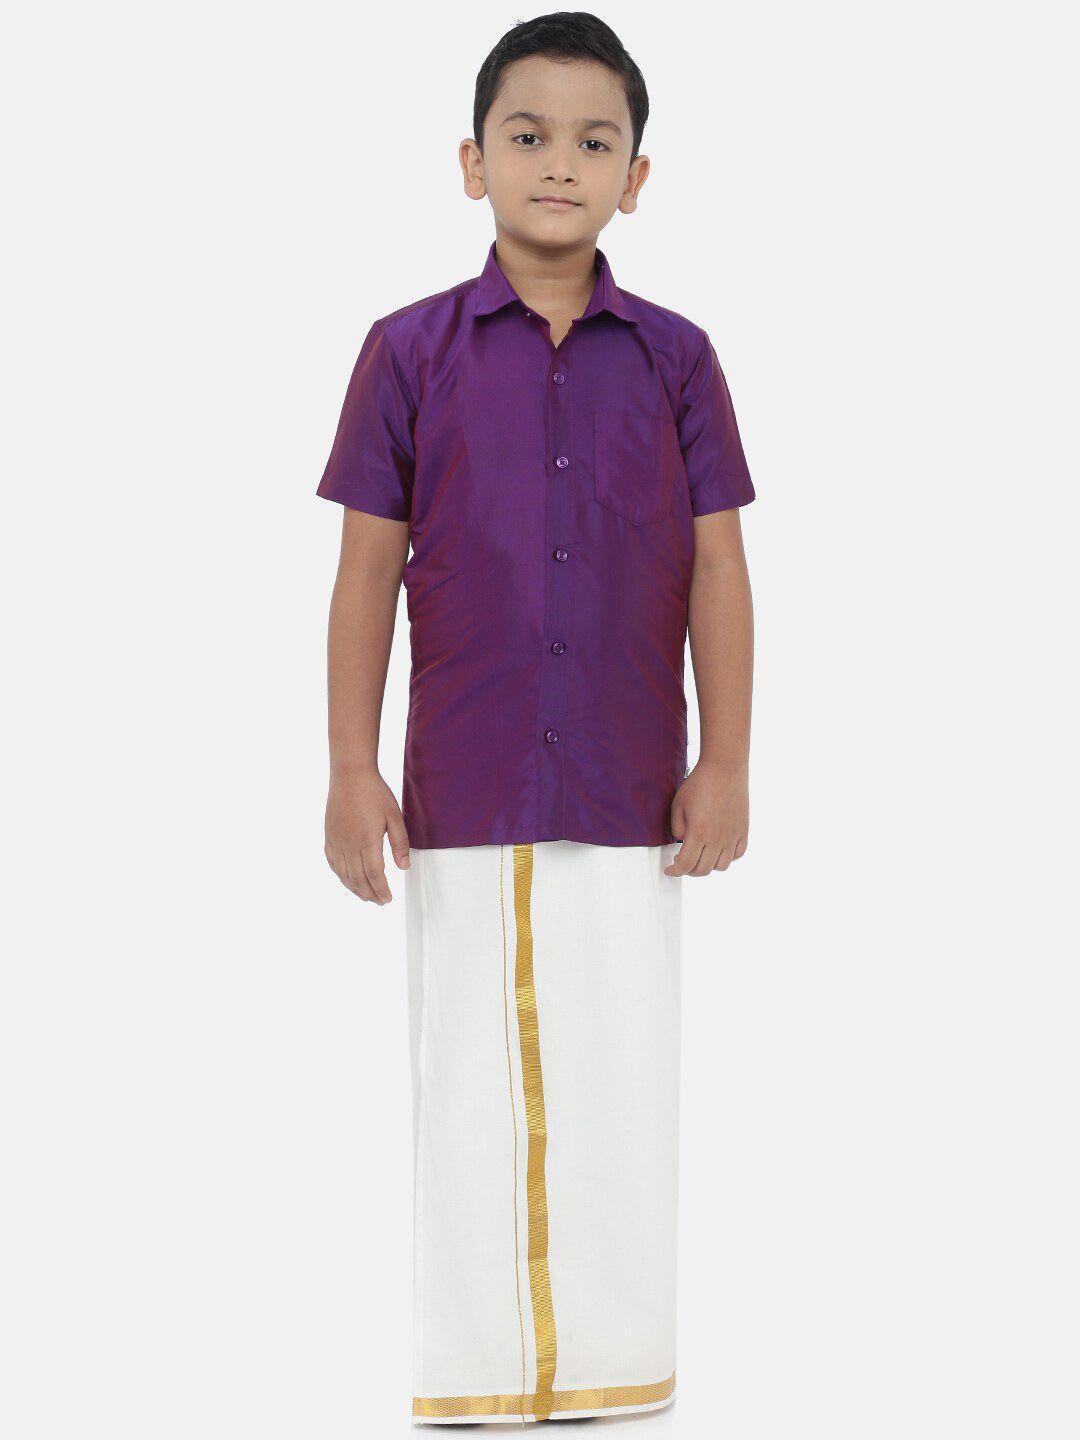 littlestars boys purple & white shirt with dhoti